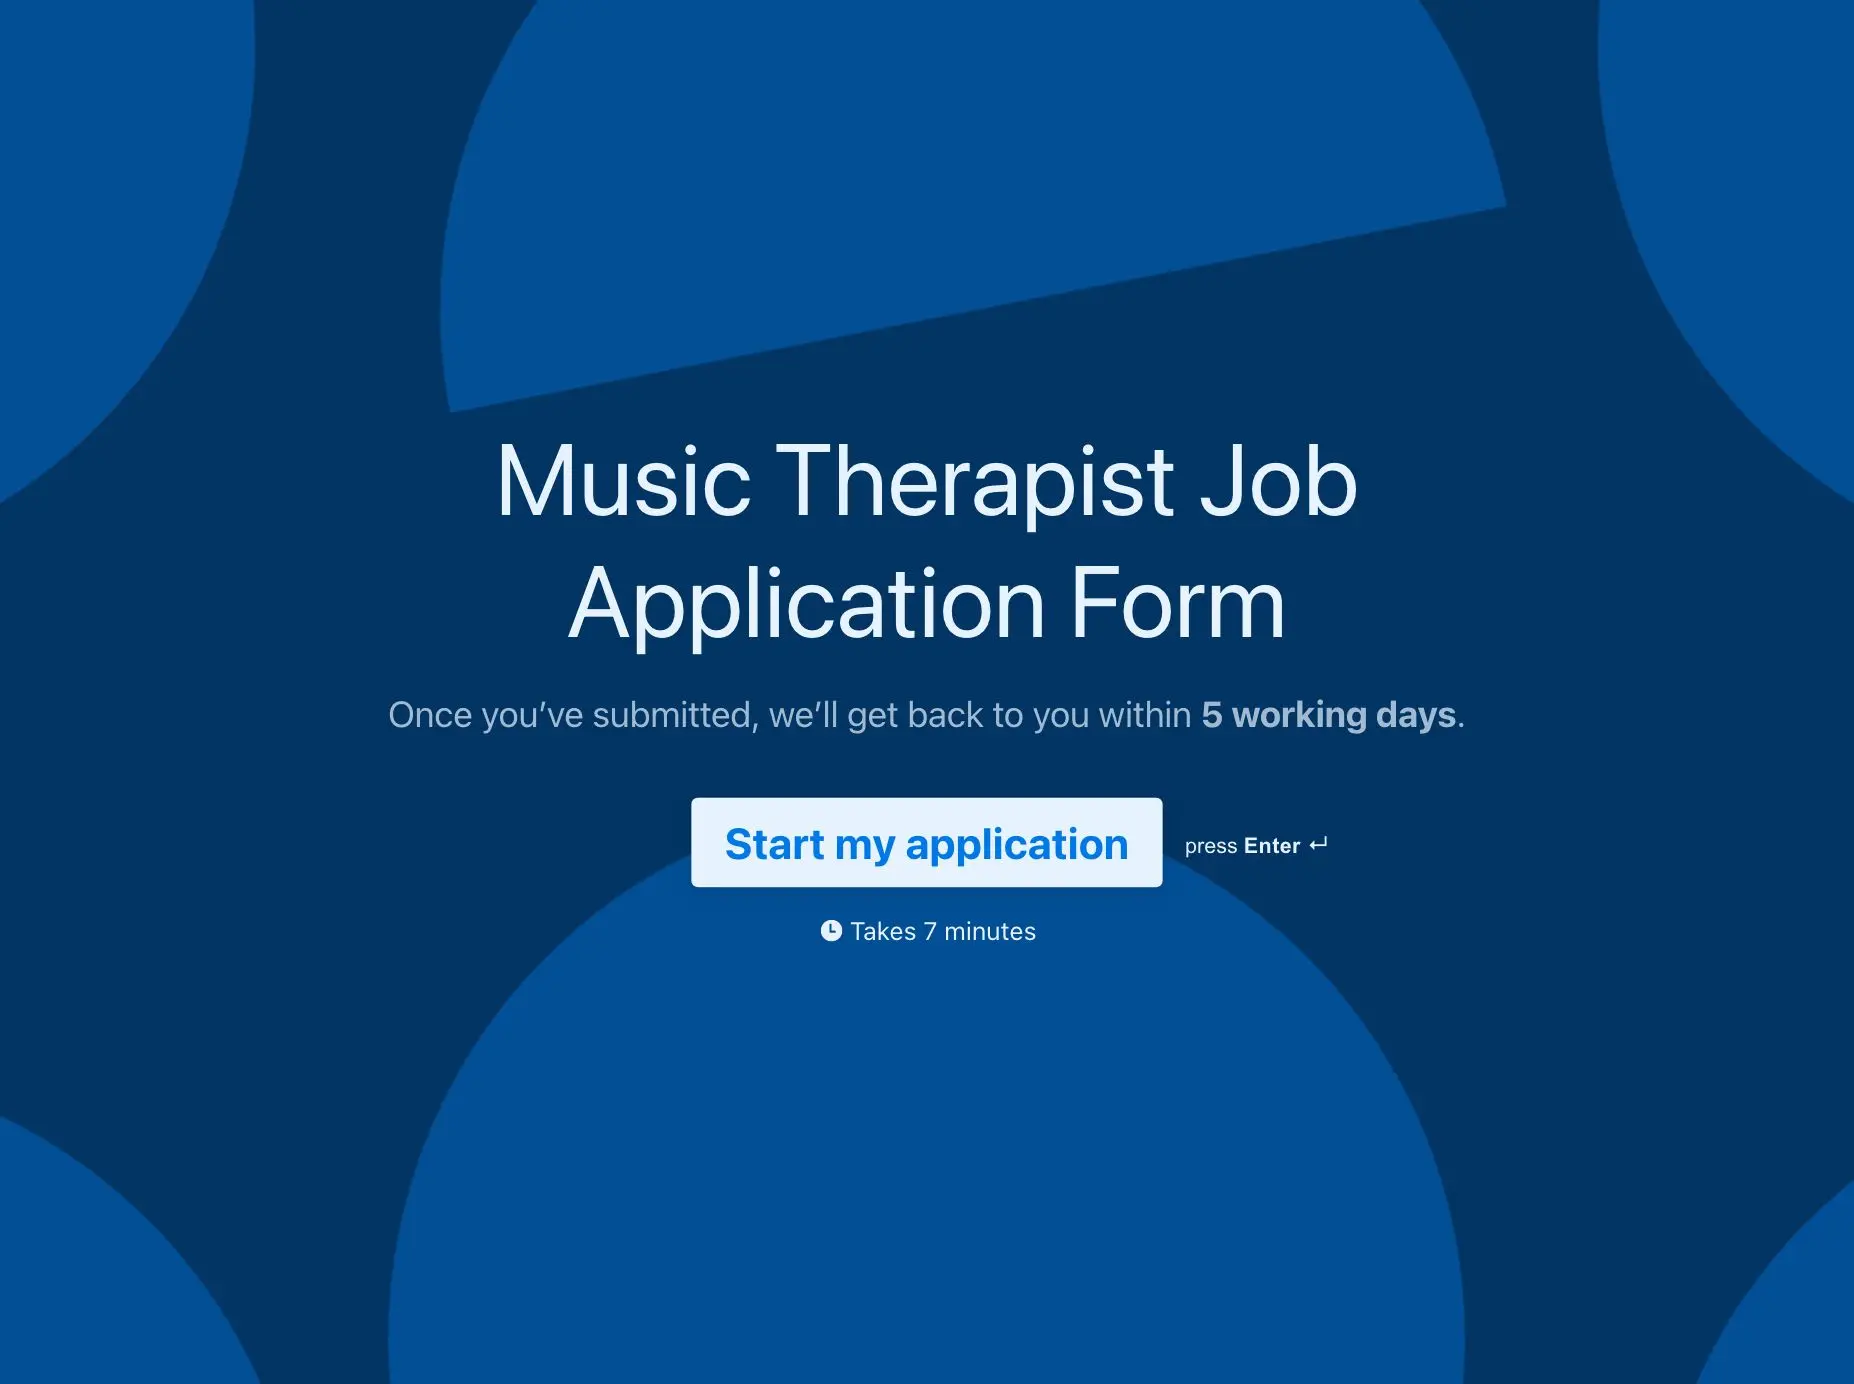 Music Therapist Job Application Form Template Hero